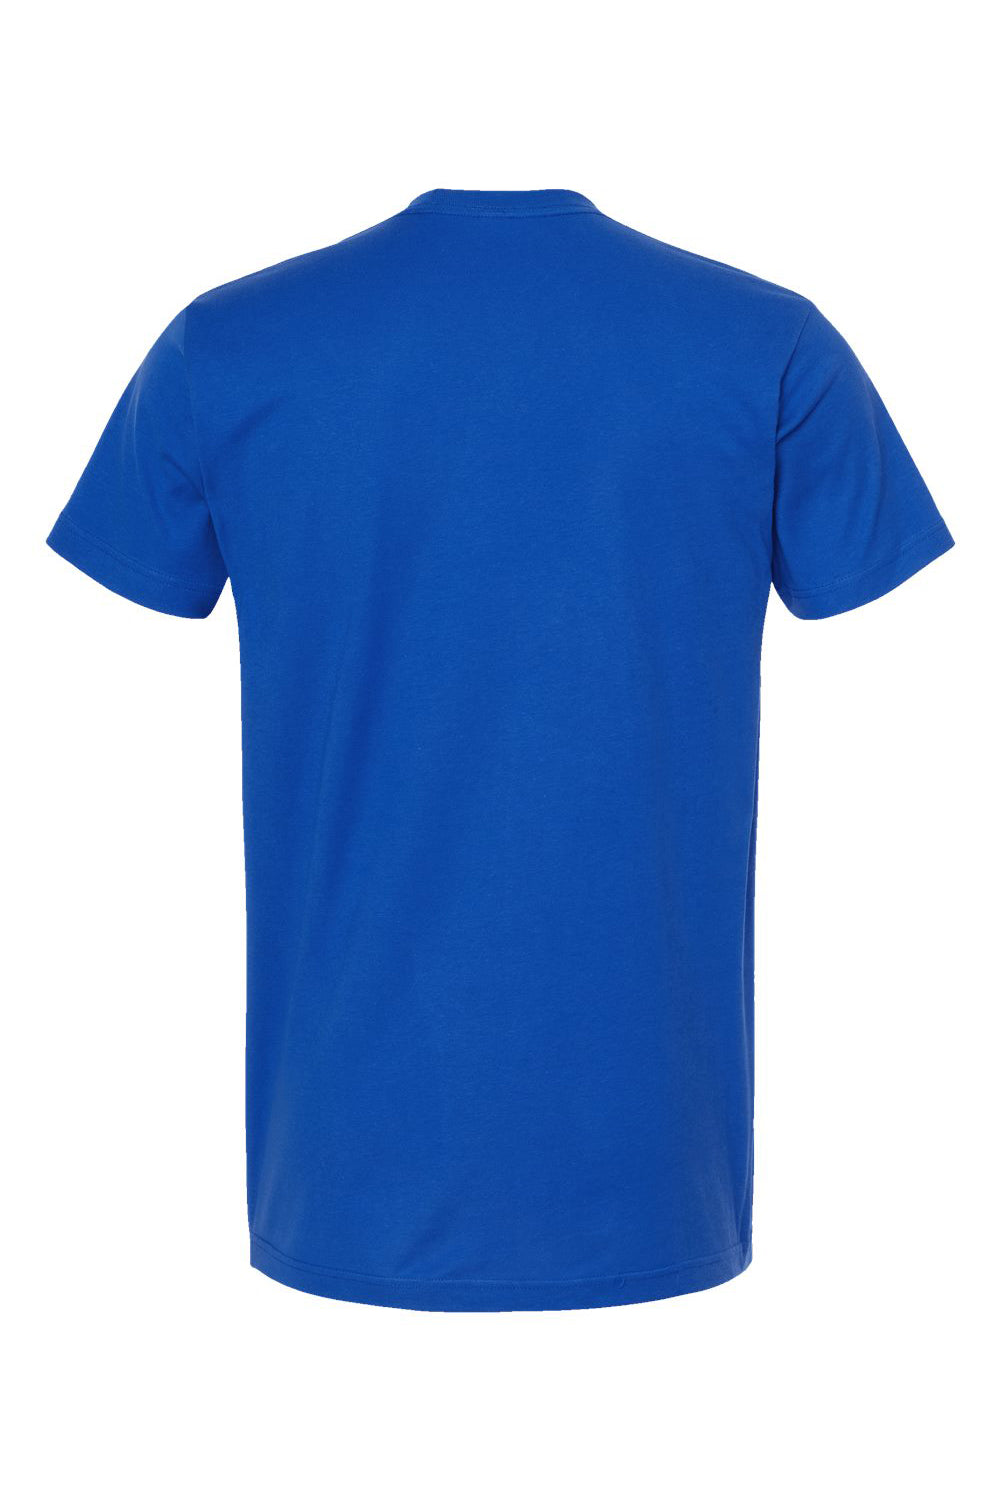 Tultex 202 Mens Fine Jersey Short Sleeve Crewneck T-Shirt Royal Blue Flat Back